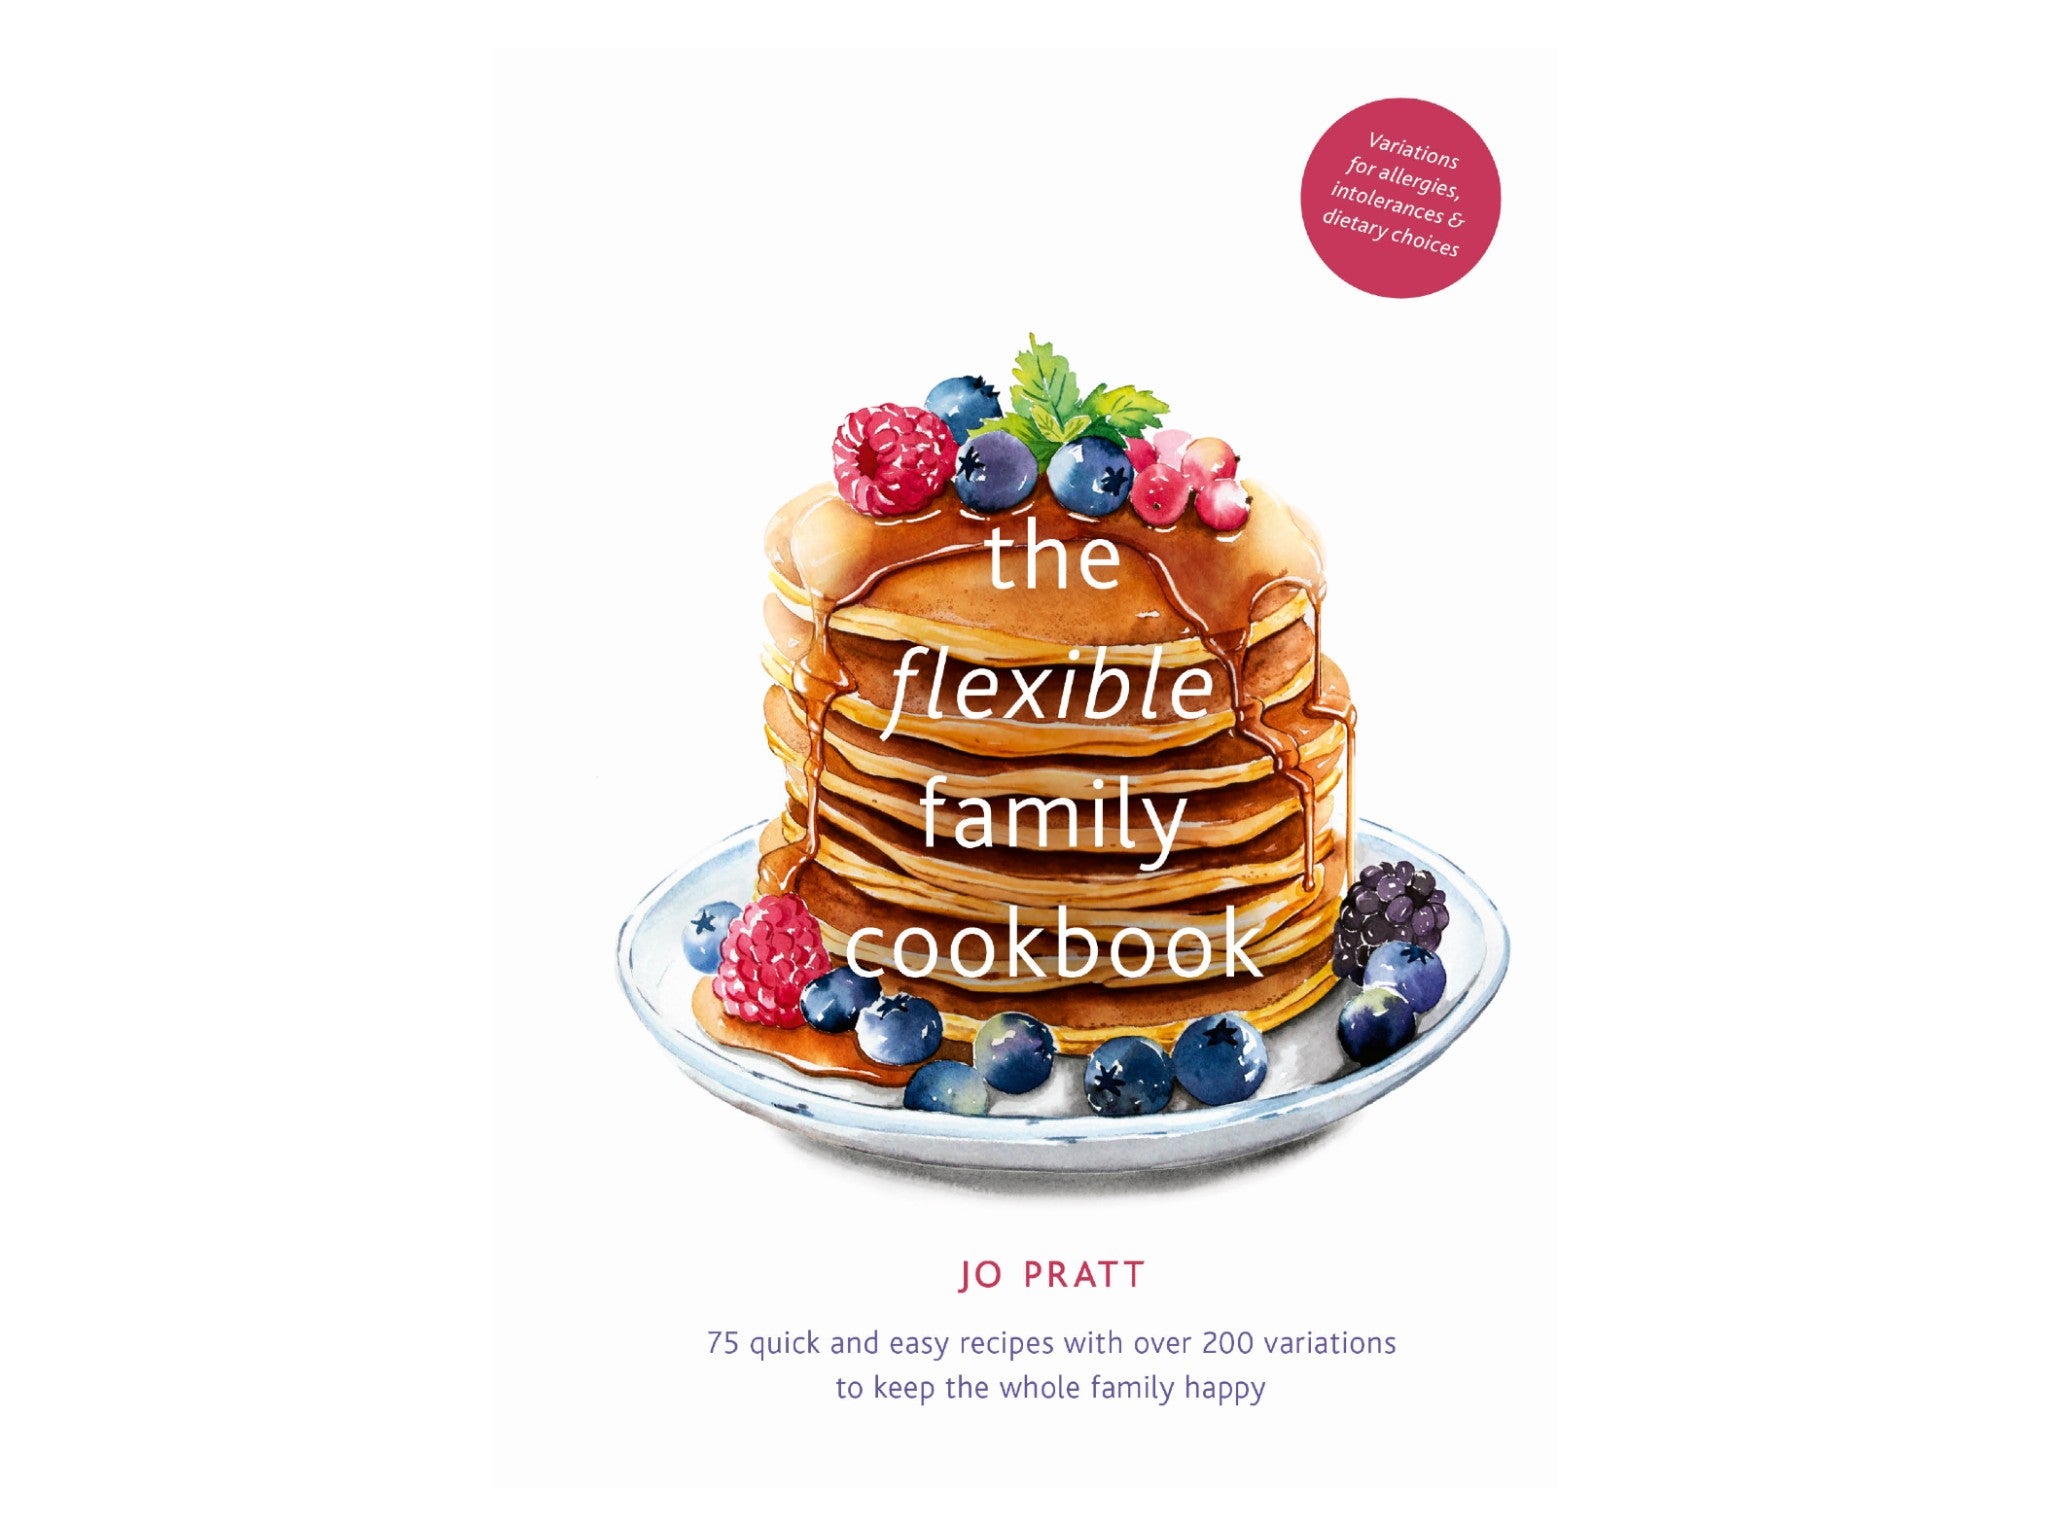 ‘The Flexible Family Cookbook’ by Jo Pratt indybest.jpeg